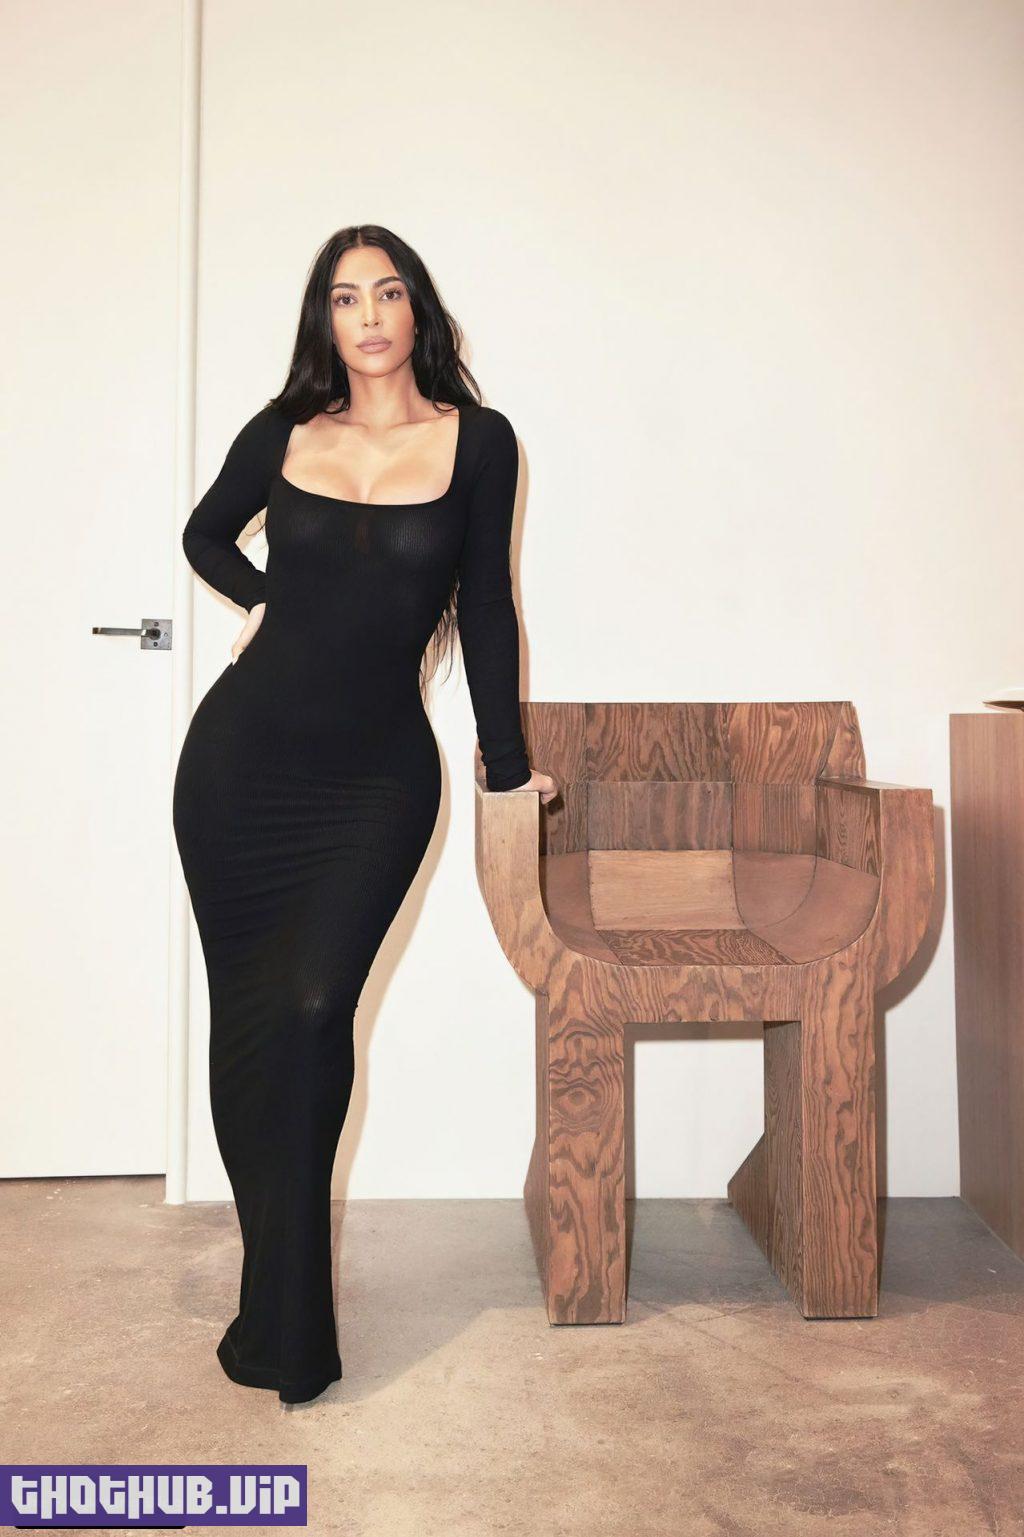 Kim Kardashian Curvy Body in Black Dress 1 thefappeningblog.com